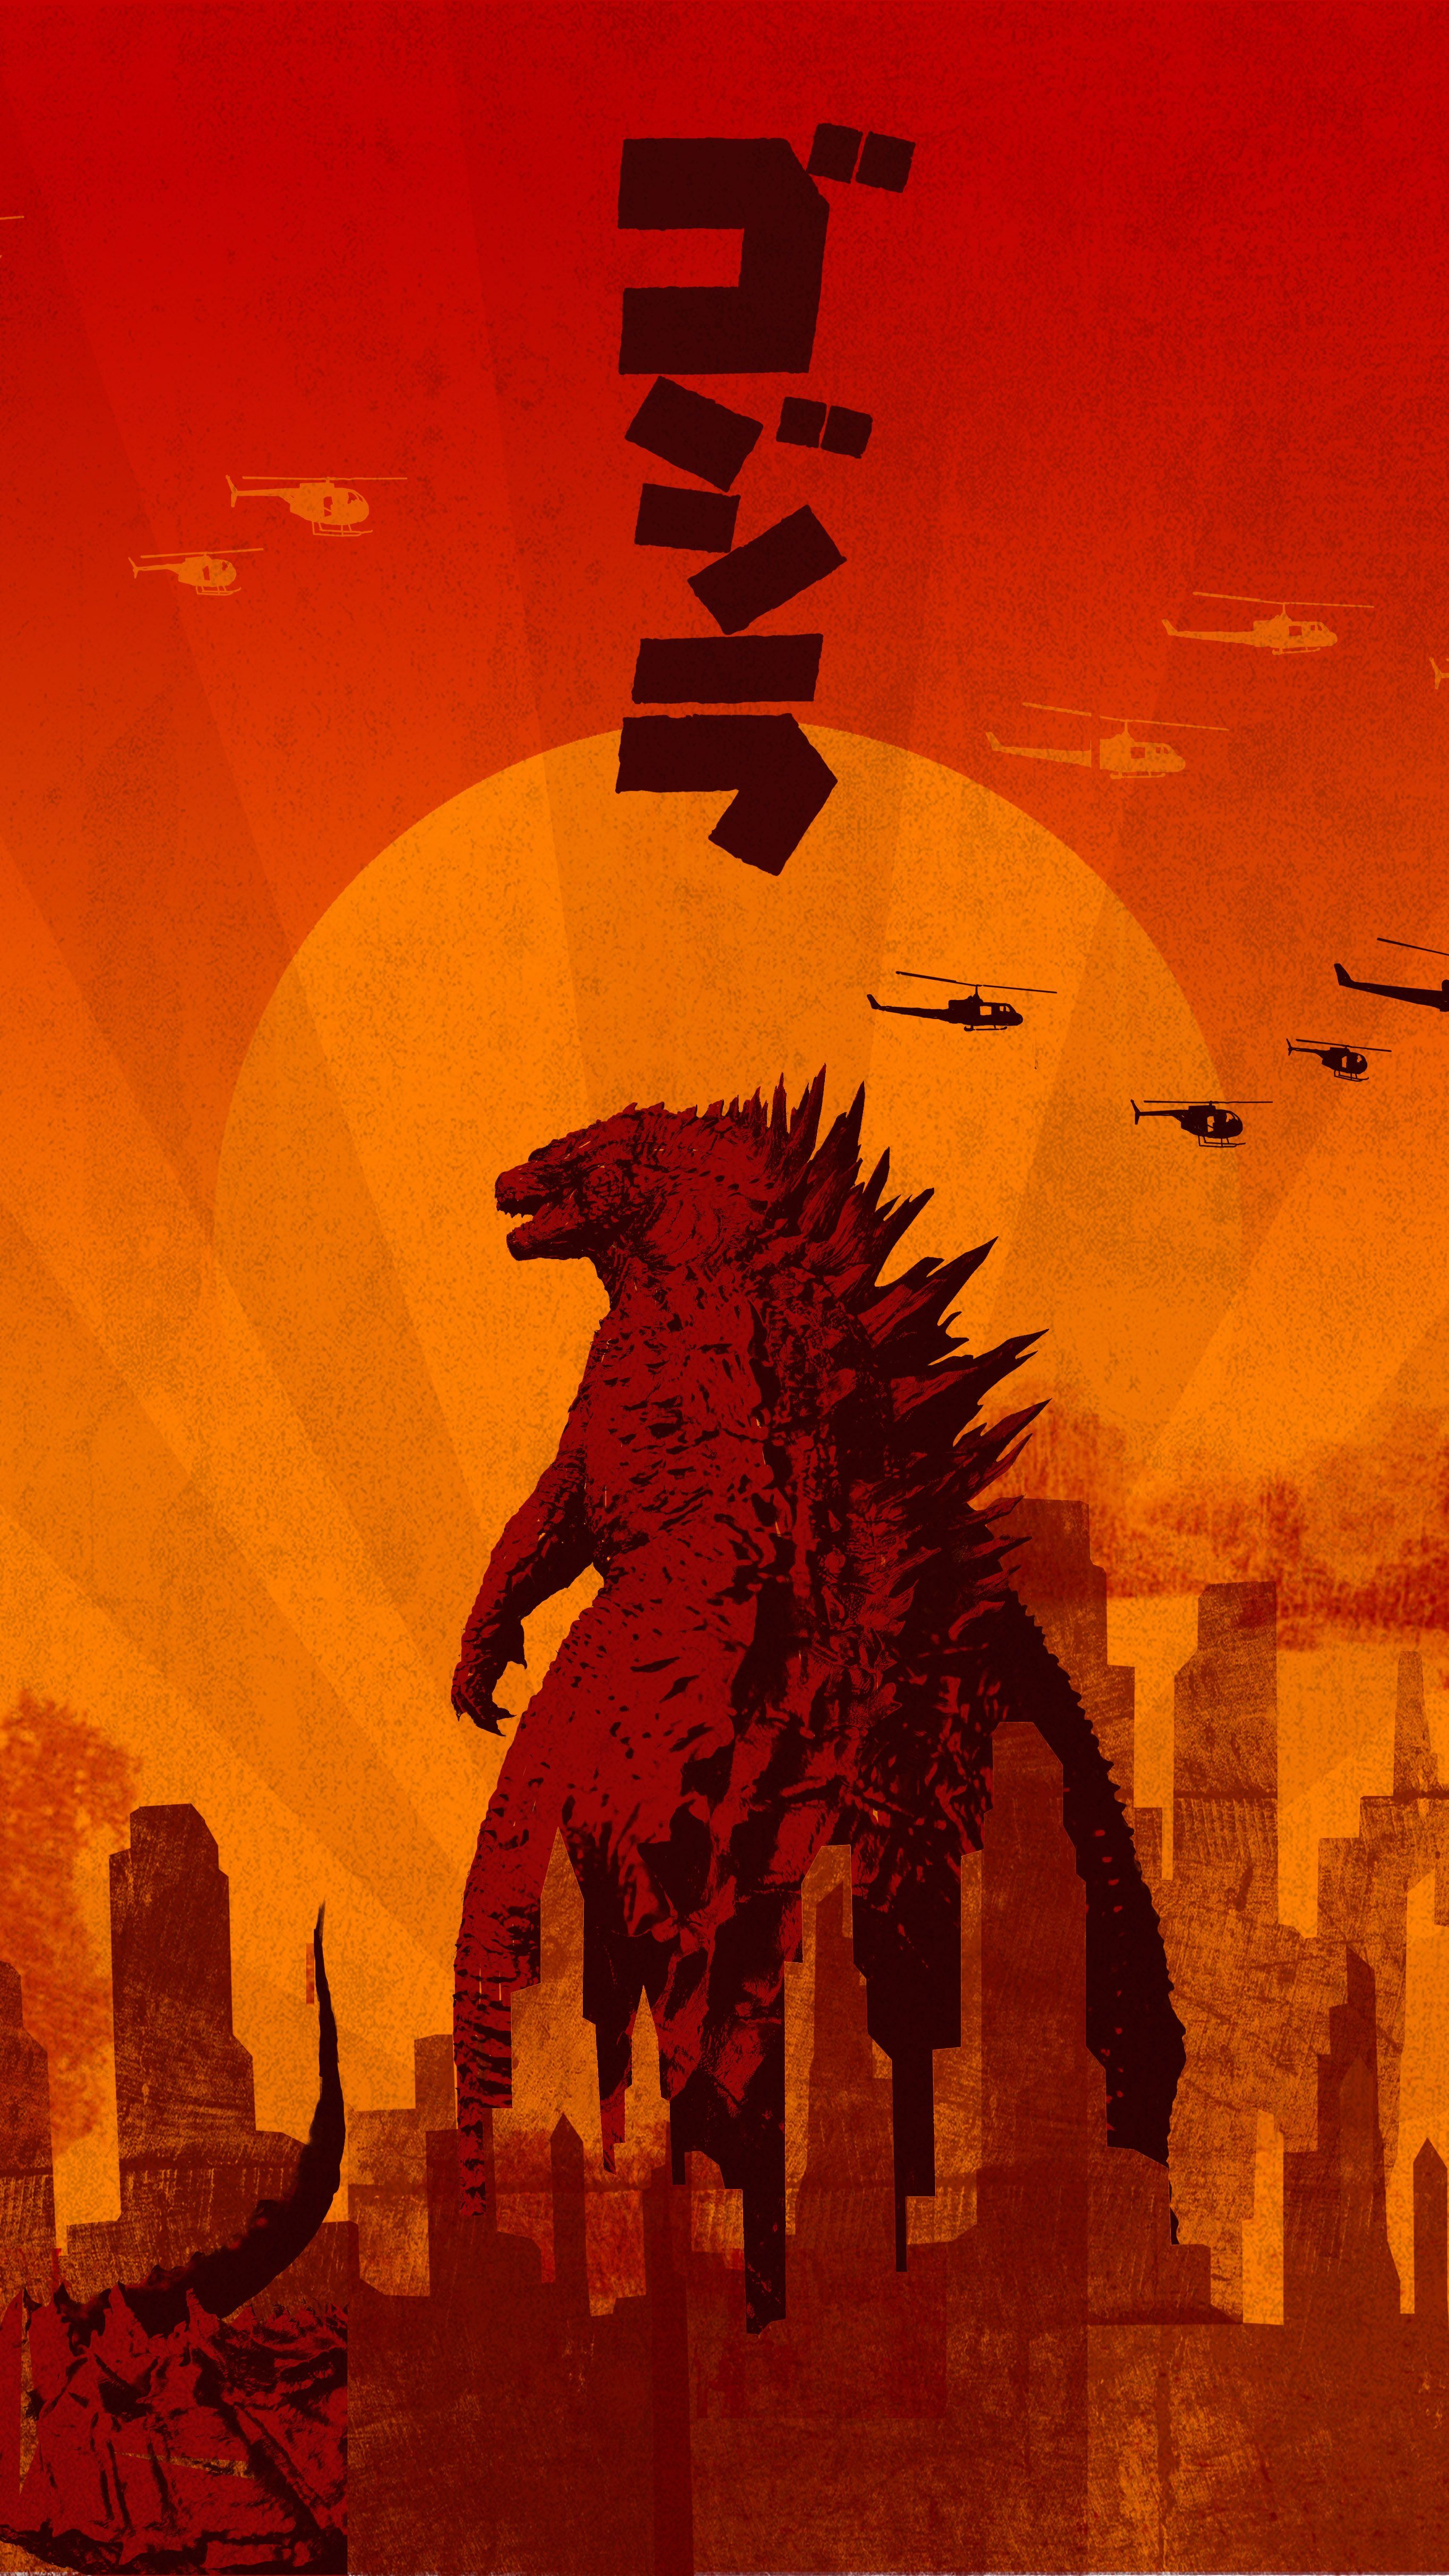 Godzilla King Kong Face 4K 5K HD Godzilla Vs King Kong Wallpapers  HD  Wallpapers  ID 69135